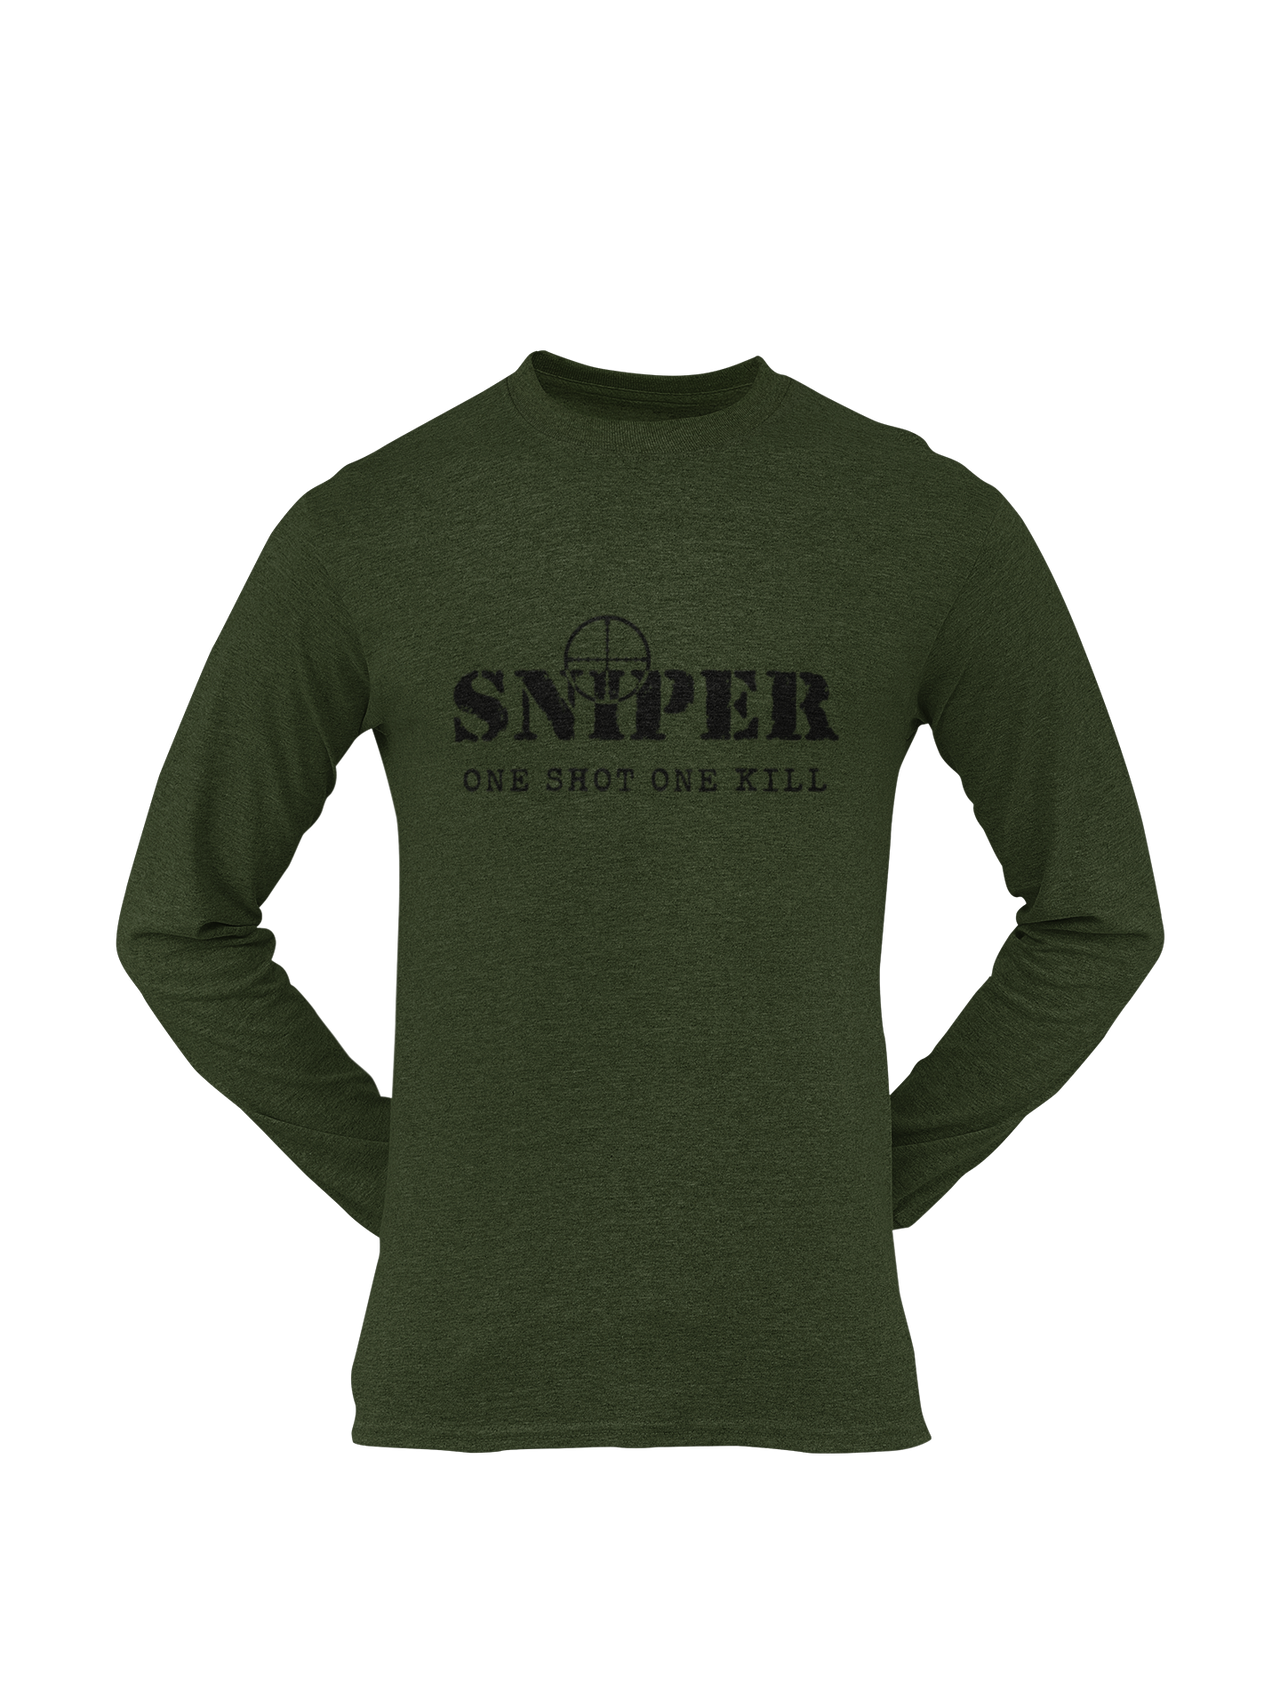 Sniper T-shirt - Sniper, One Shot, One Kill (Men)